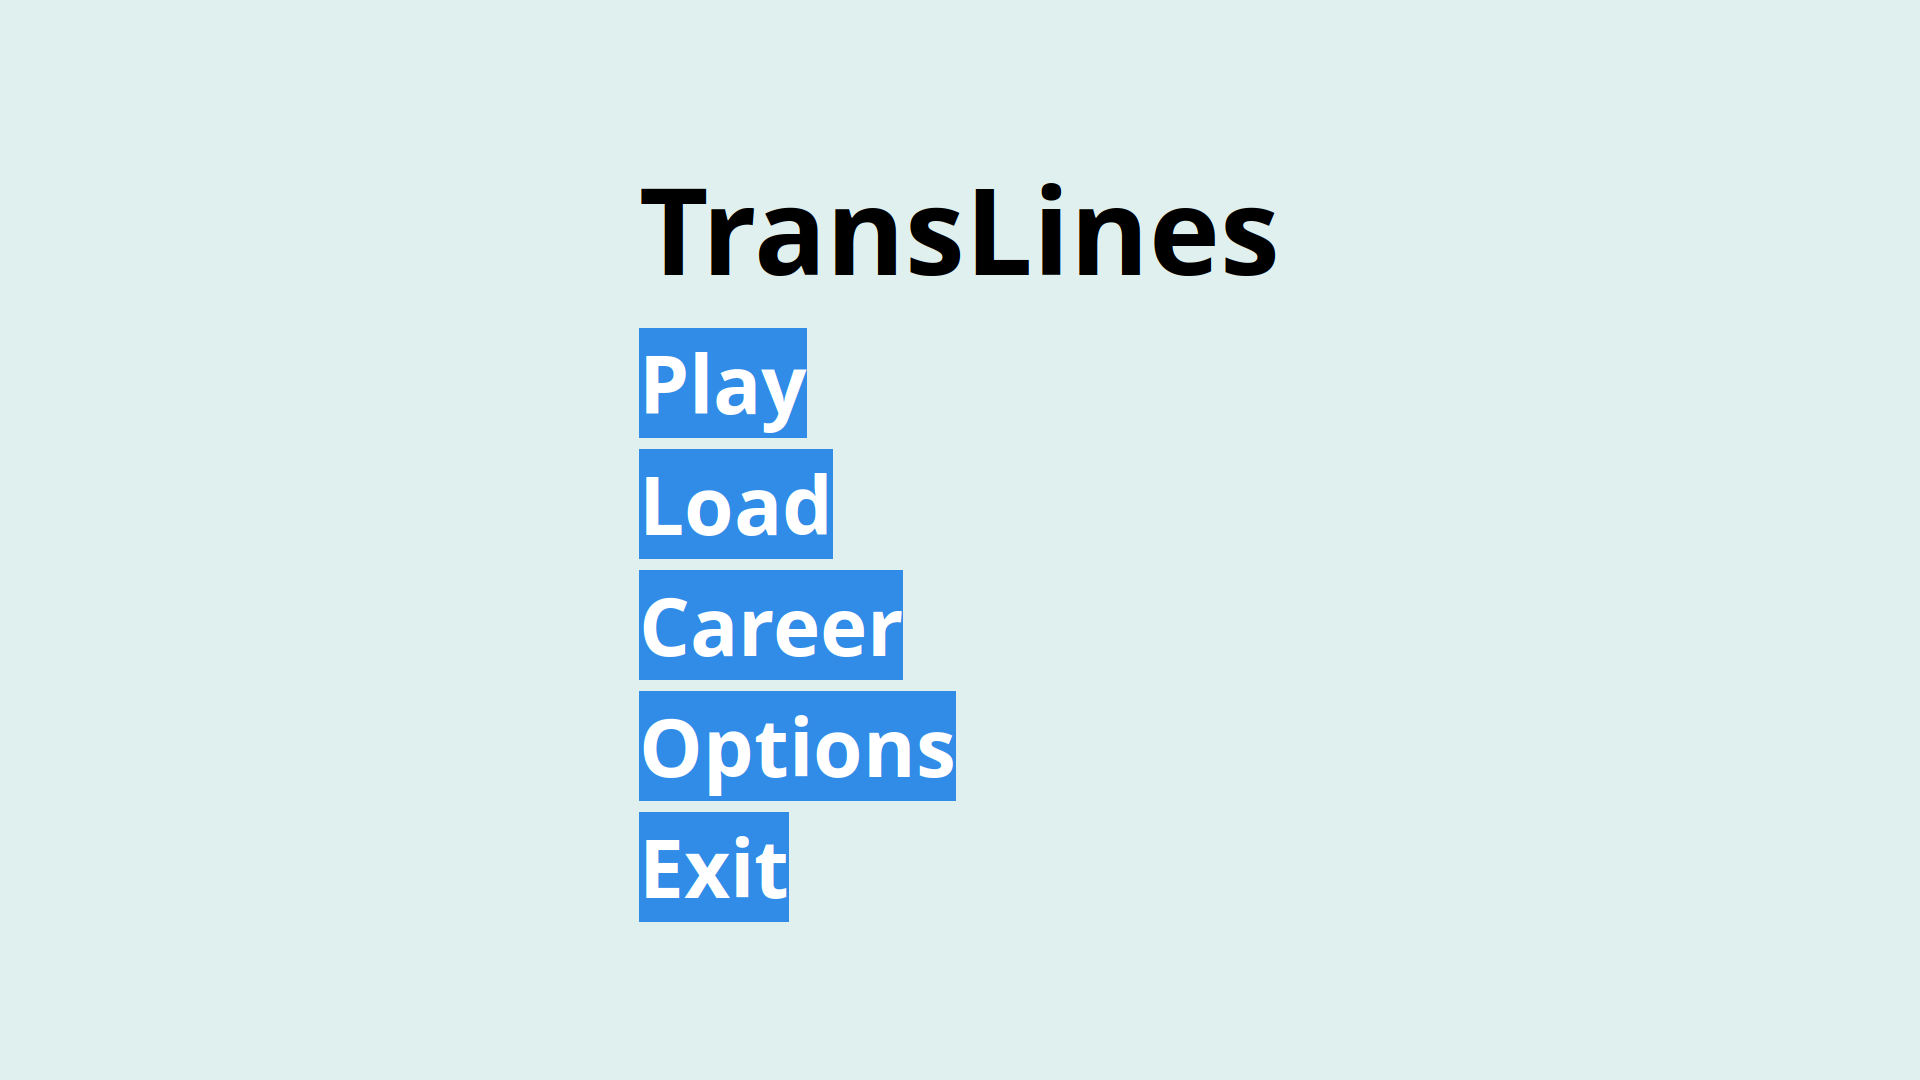 TransLines